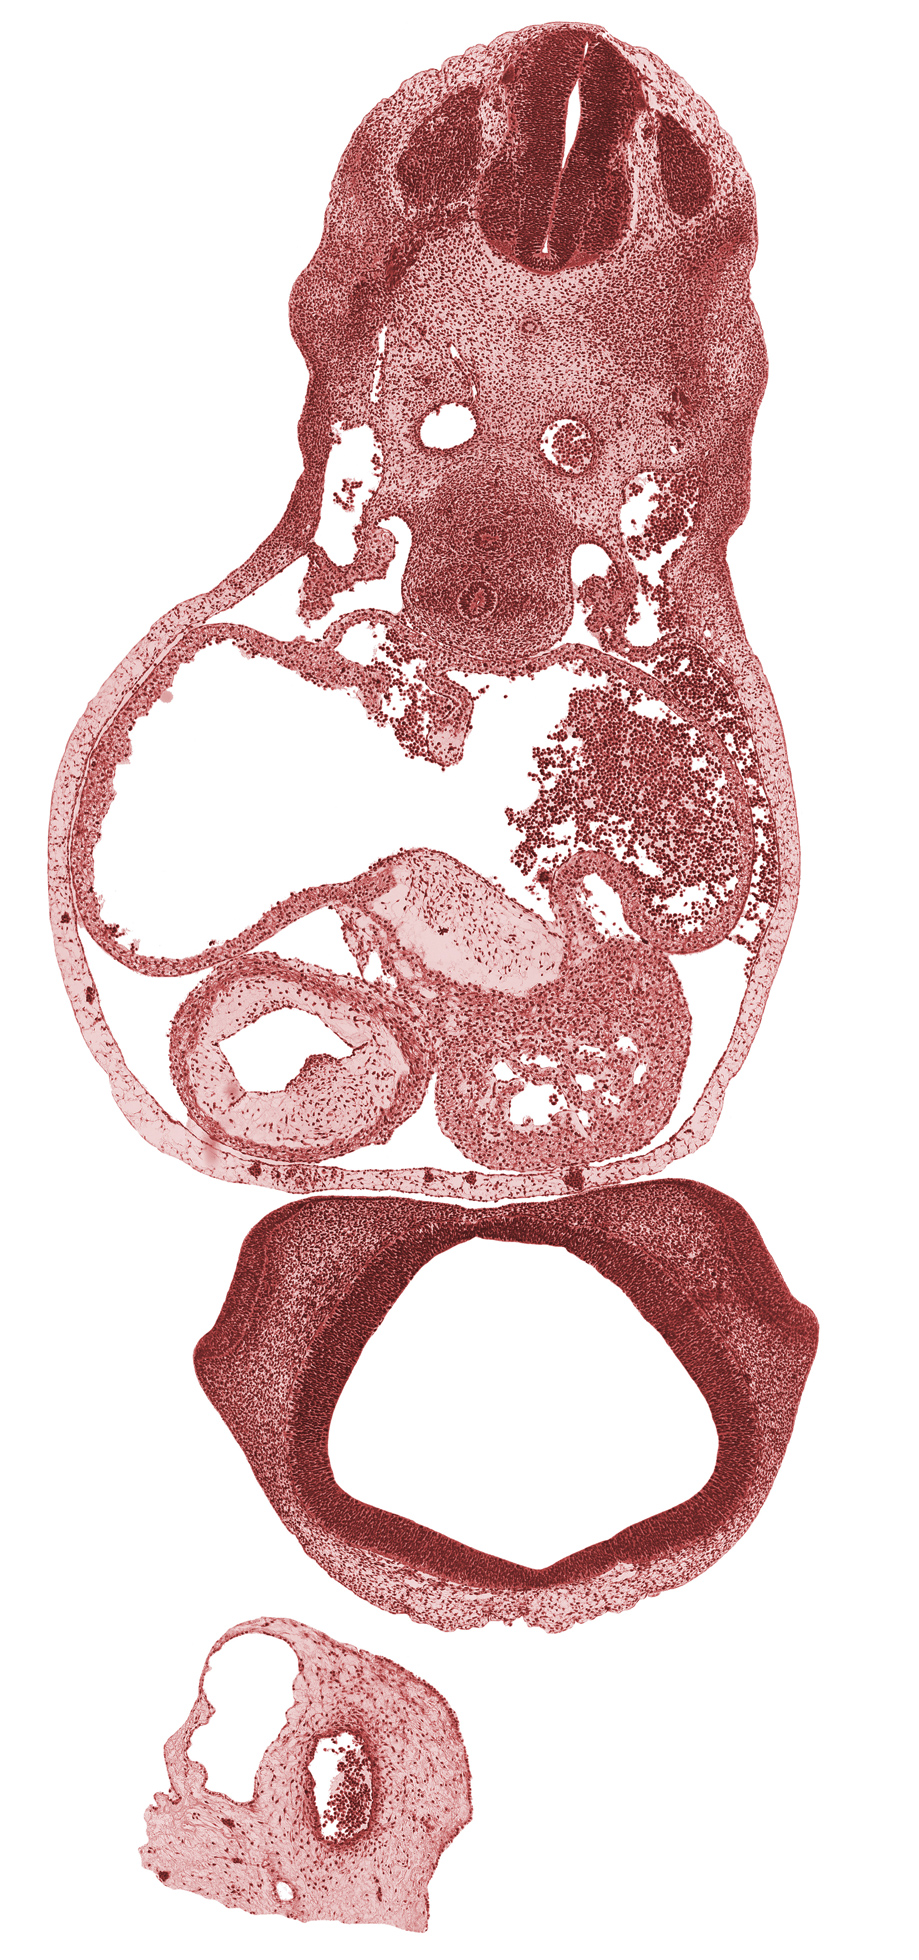 C-5 spinal ganglion, conus cordis (outflow tract), diencoel (third ventricle), esophagus primordium, lateral nasal prominence, left atrium, left common cardinal vein, left venous valve, left ventricle, medial nasal prominence(s), nasal pit, notochord, olfactory area, pericardial cavity, postcardinal vein, primary interatrial foramen (foramen primum), primary interatrial septum (septum primum), right atrium, right common cardinal vein, right venous valve, sclerotome, shoulder region, sinus venosus, trachea, ventral atrioventricular endocardial cushion